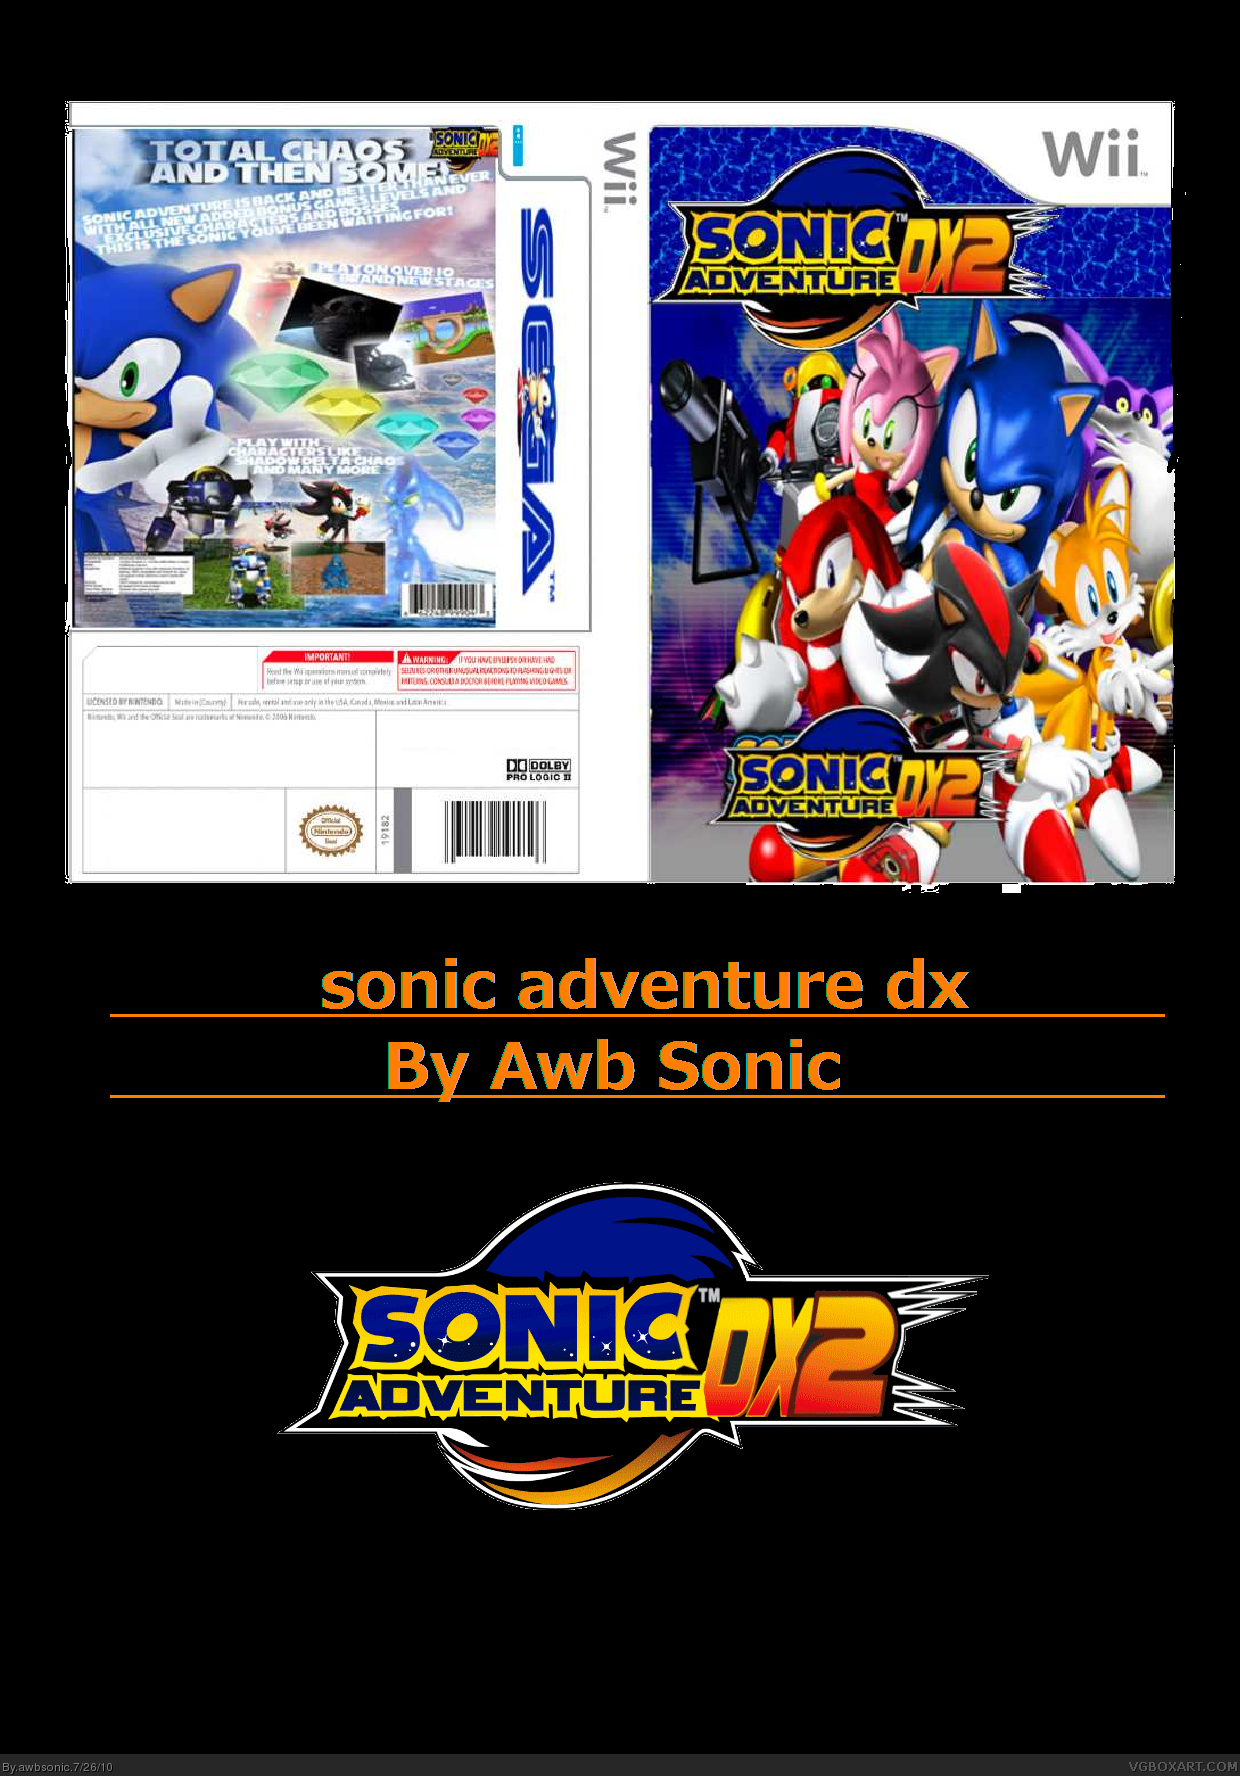 Sonic adventure dx 2 box cover